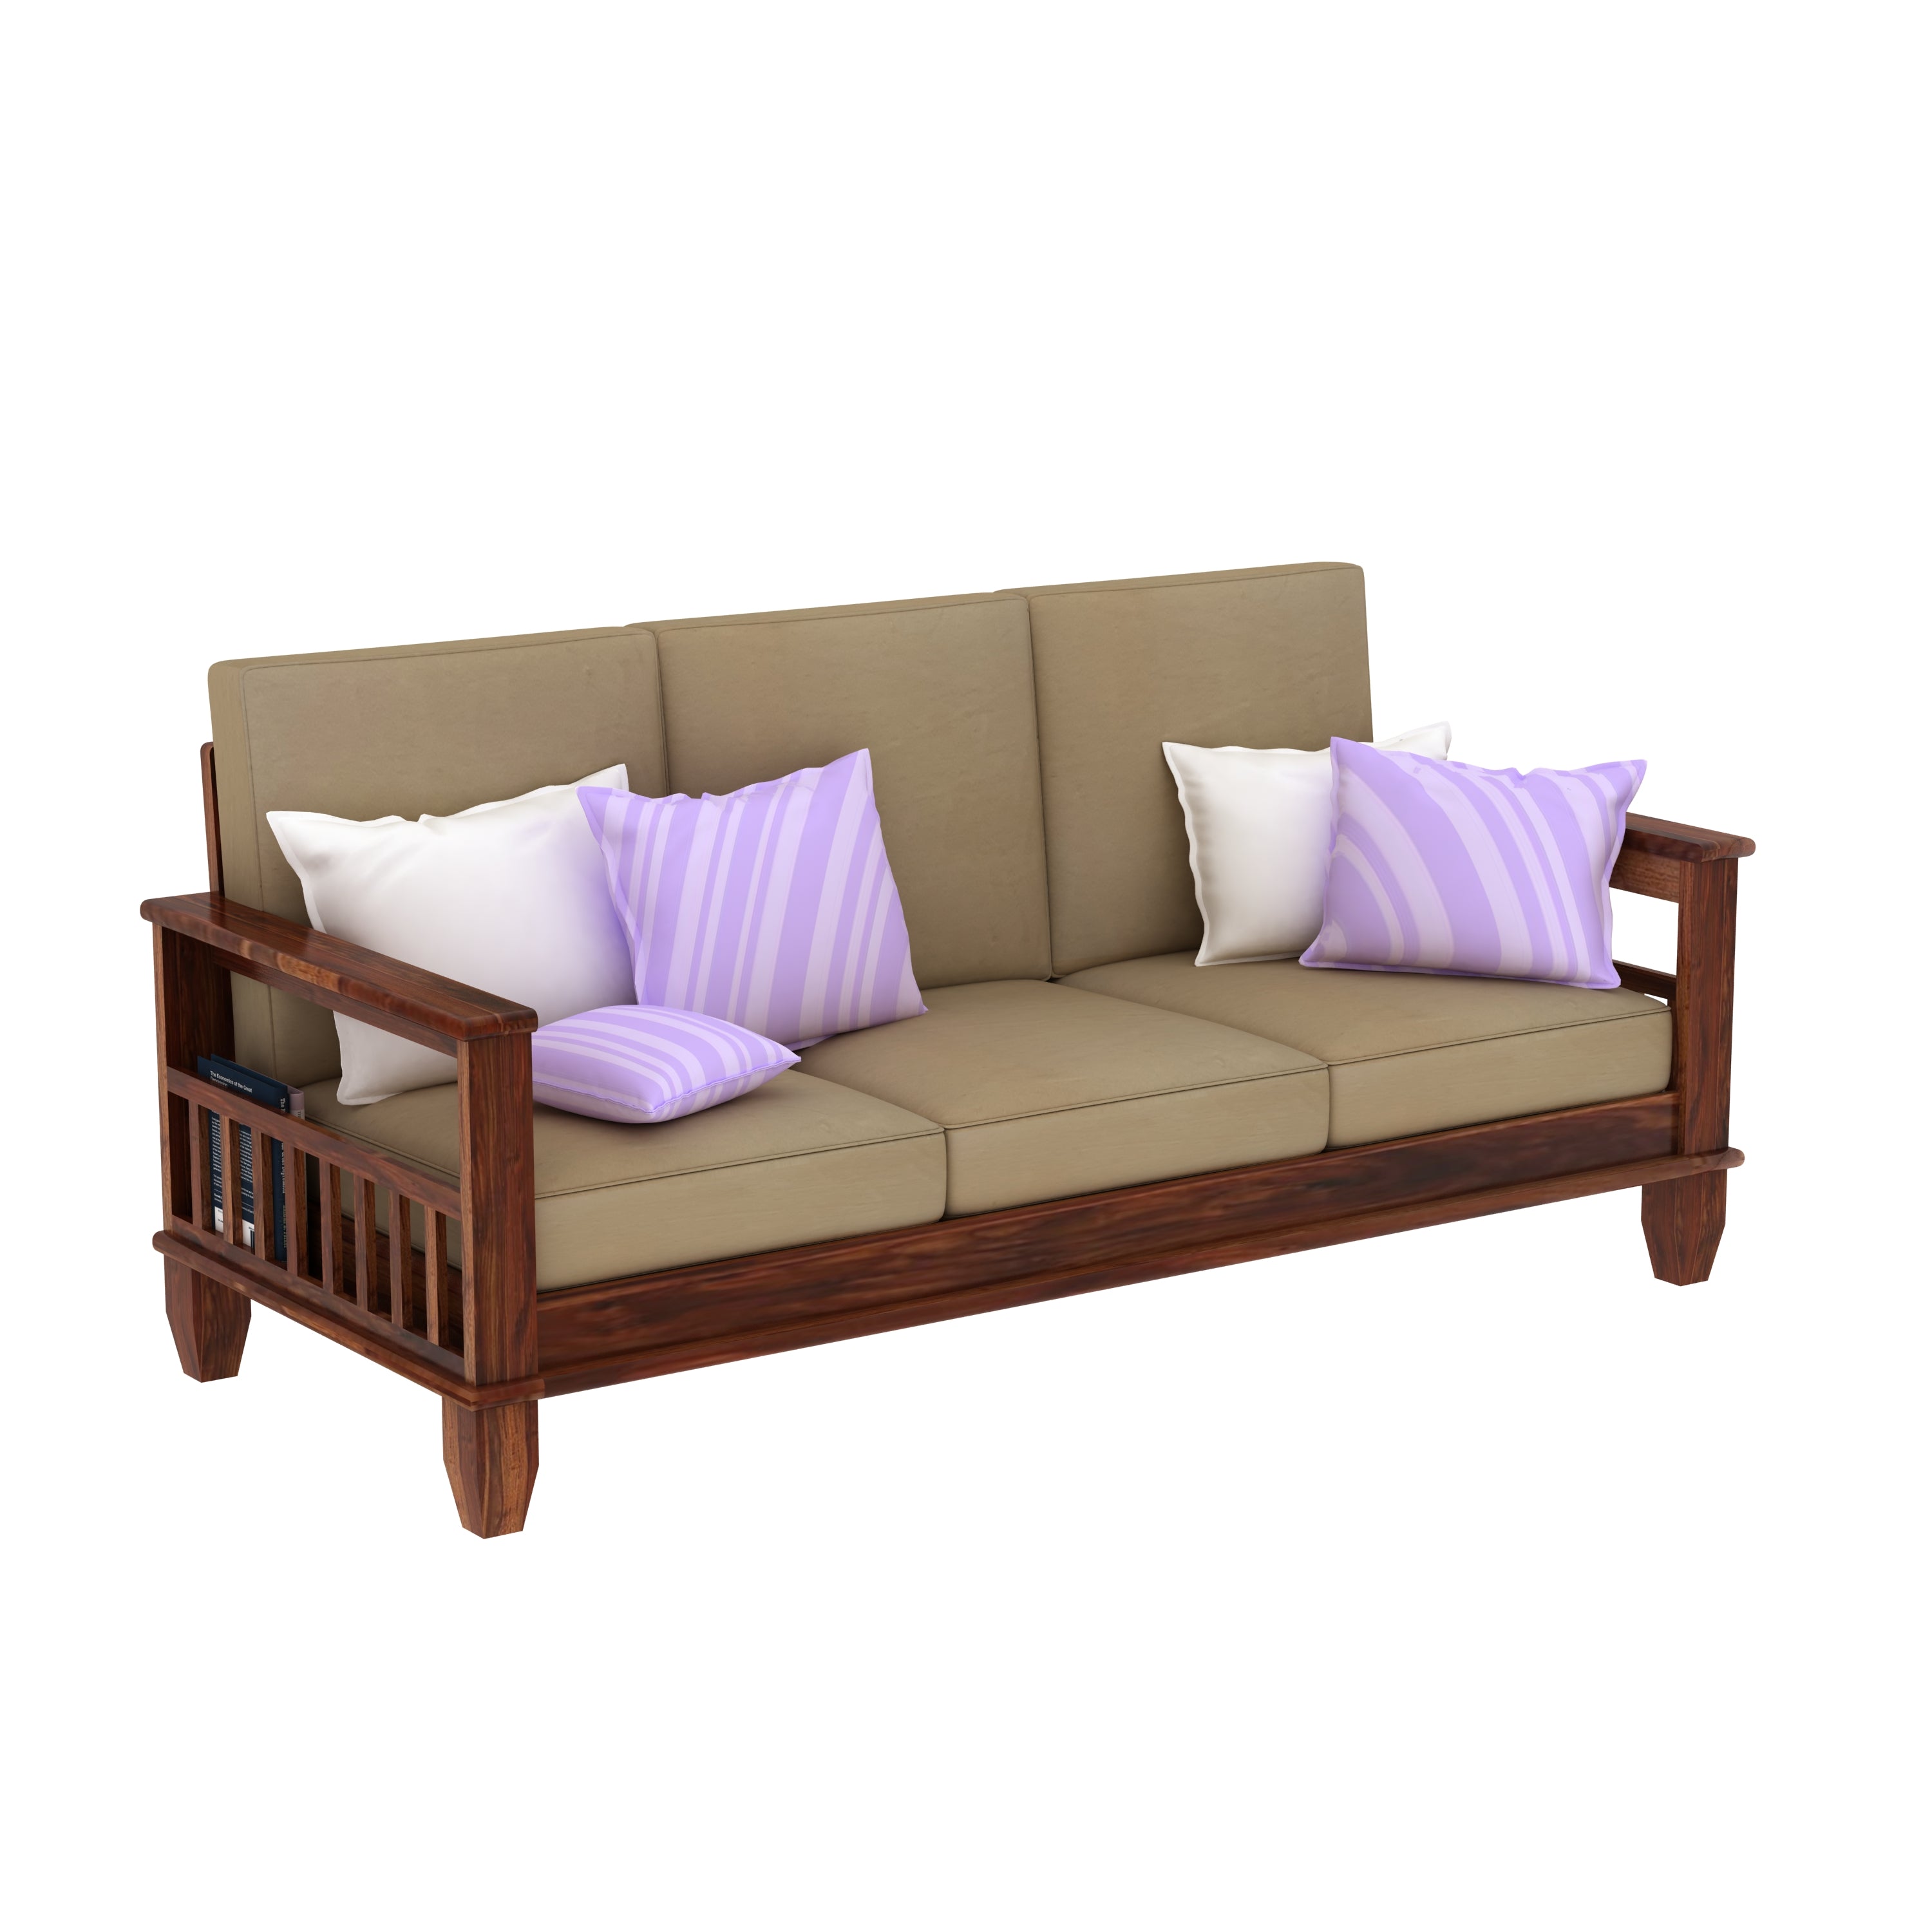 Trinity Solid Sheesham Wood 5 Seater Sofa Set (3+2, Natural Finish)